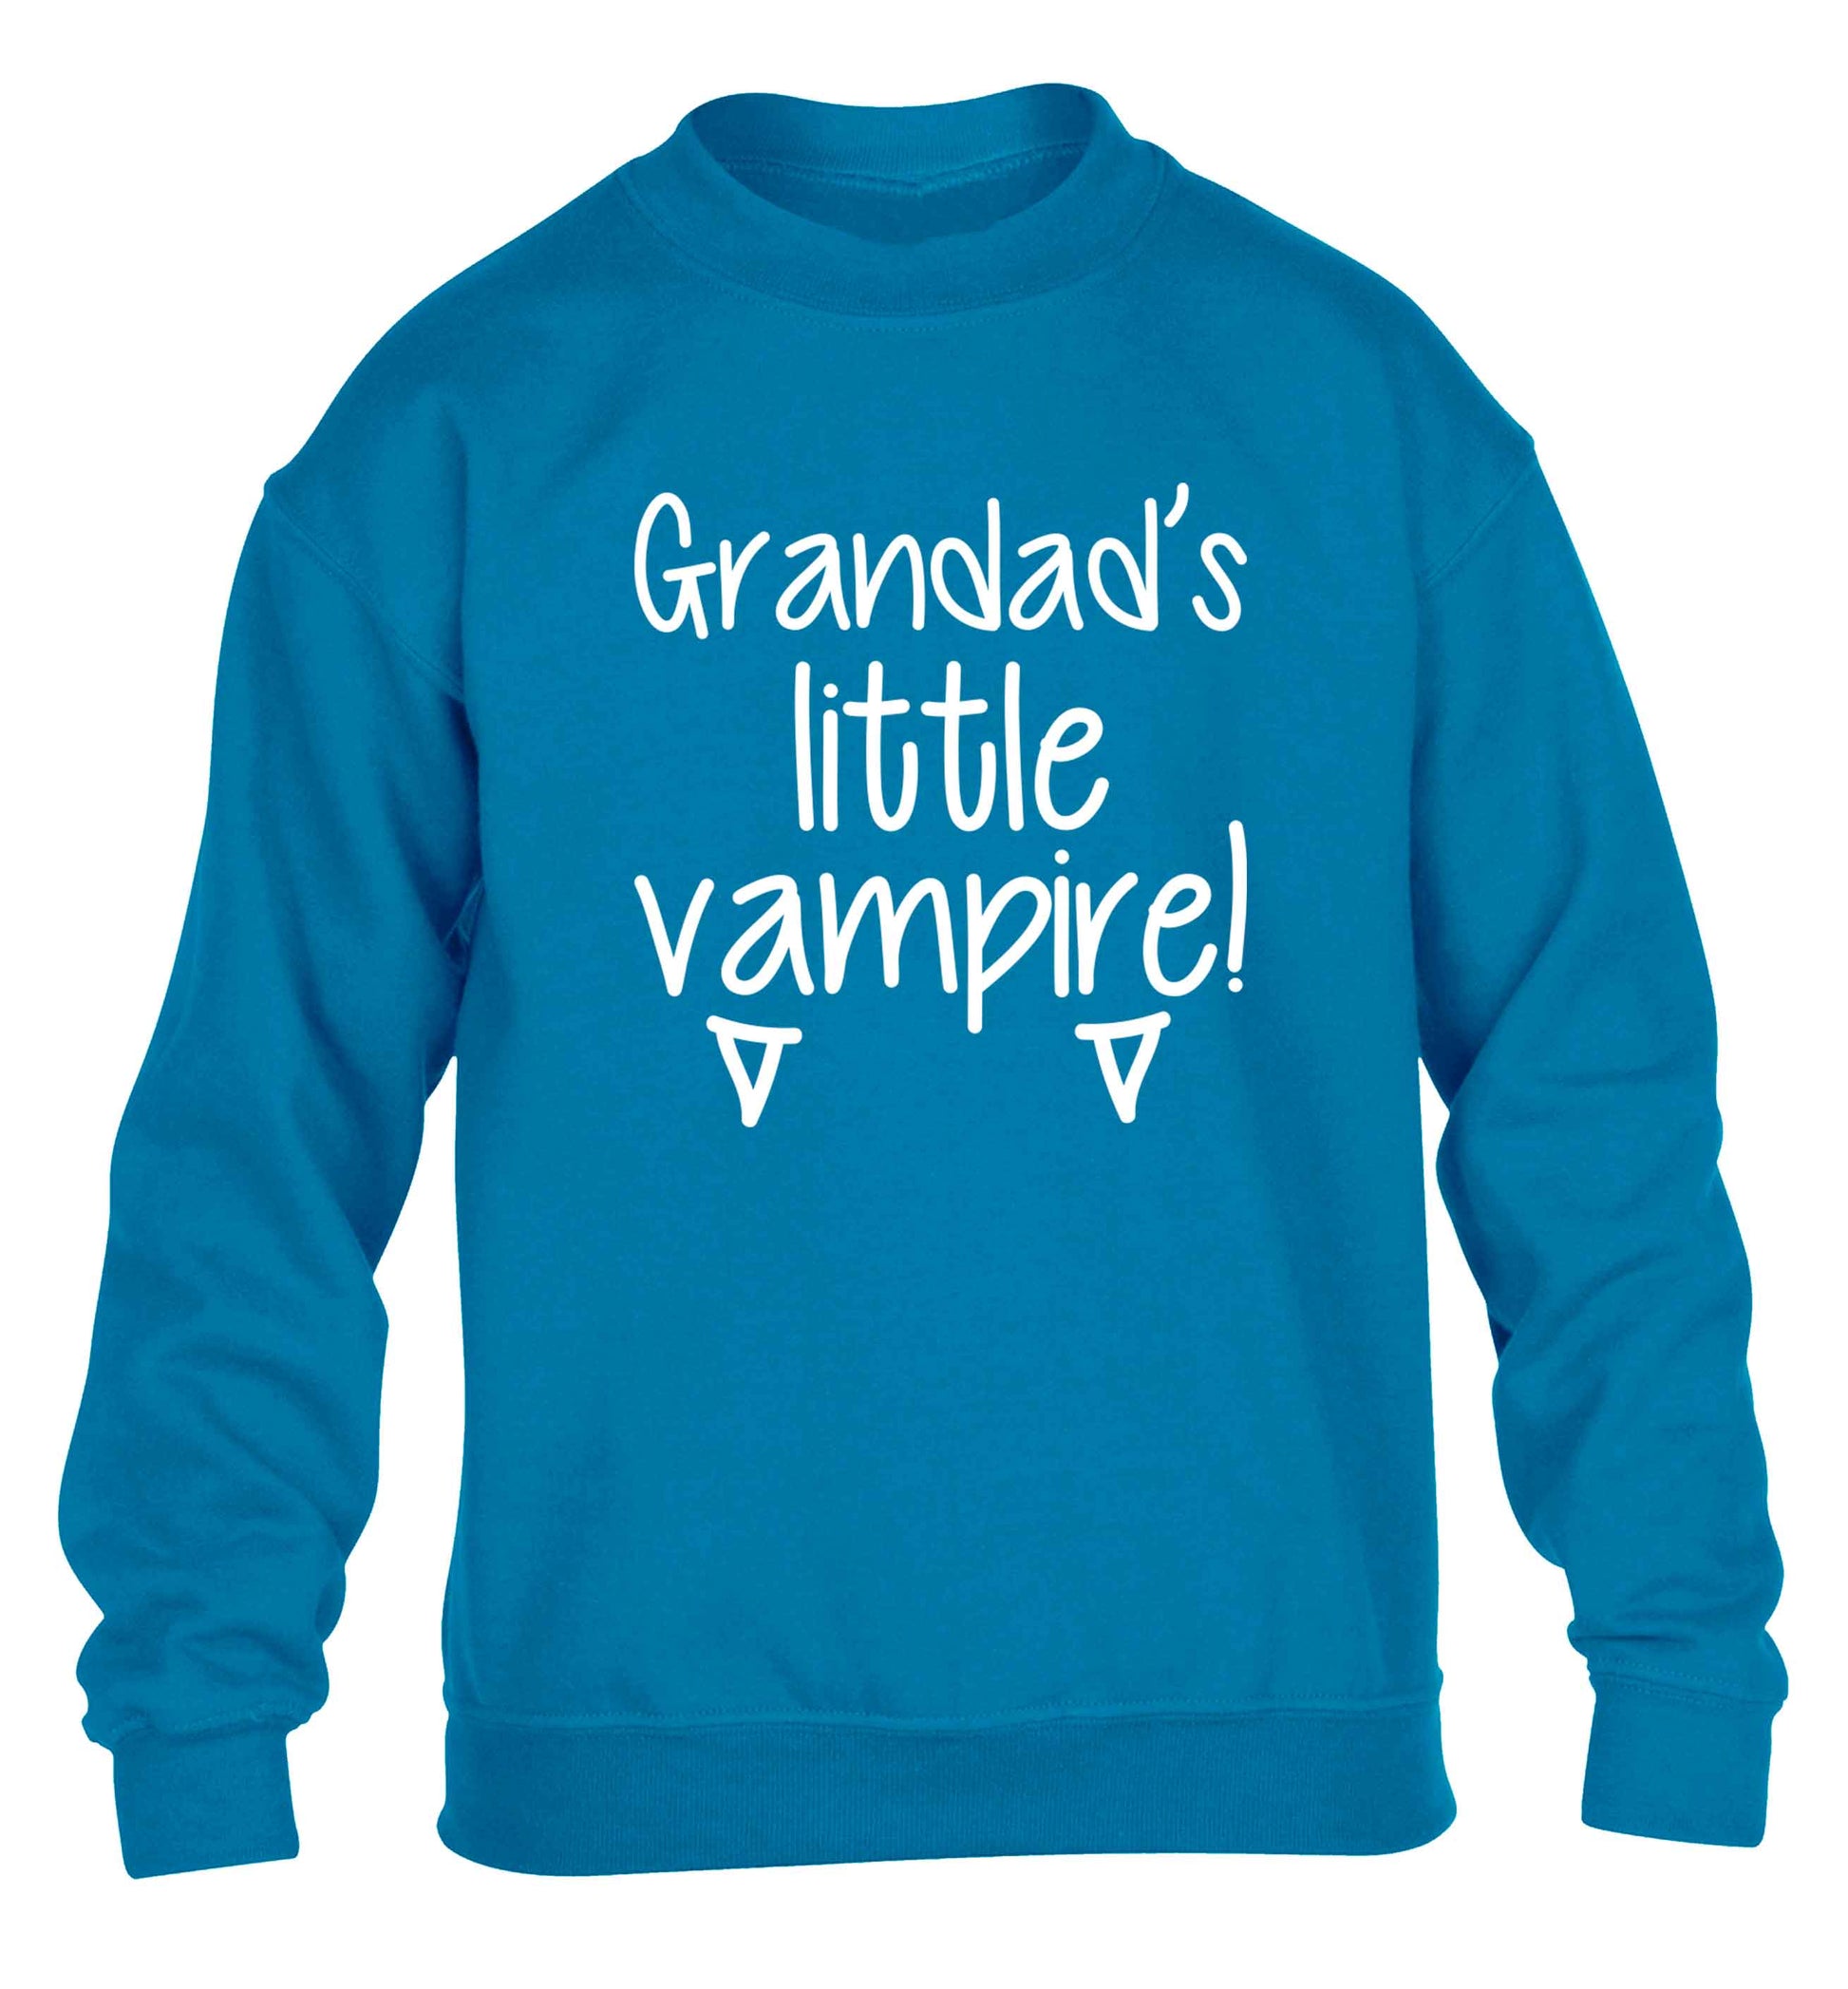 Grandad's little vampire children's blue sweater 12-13 Years